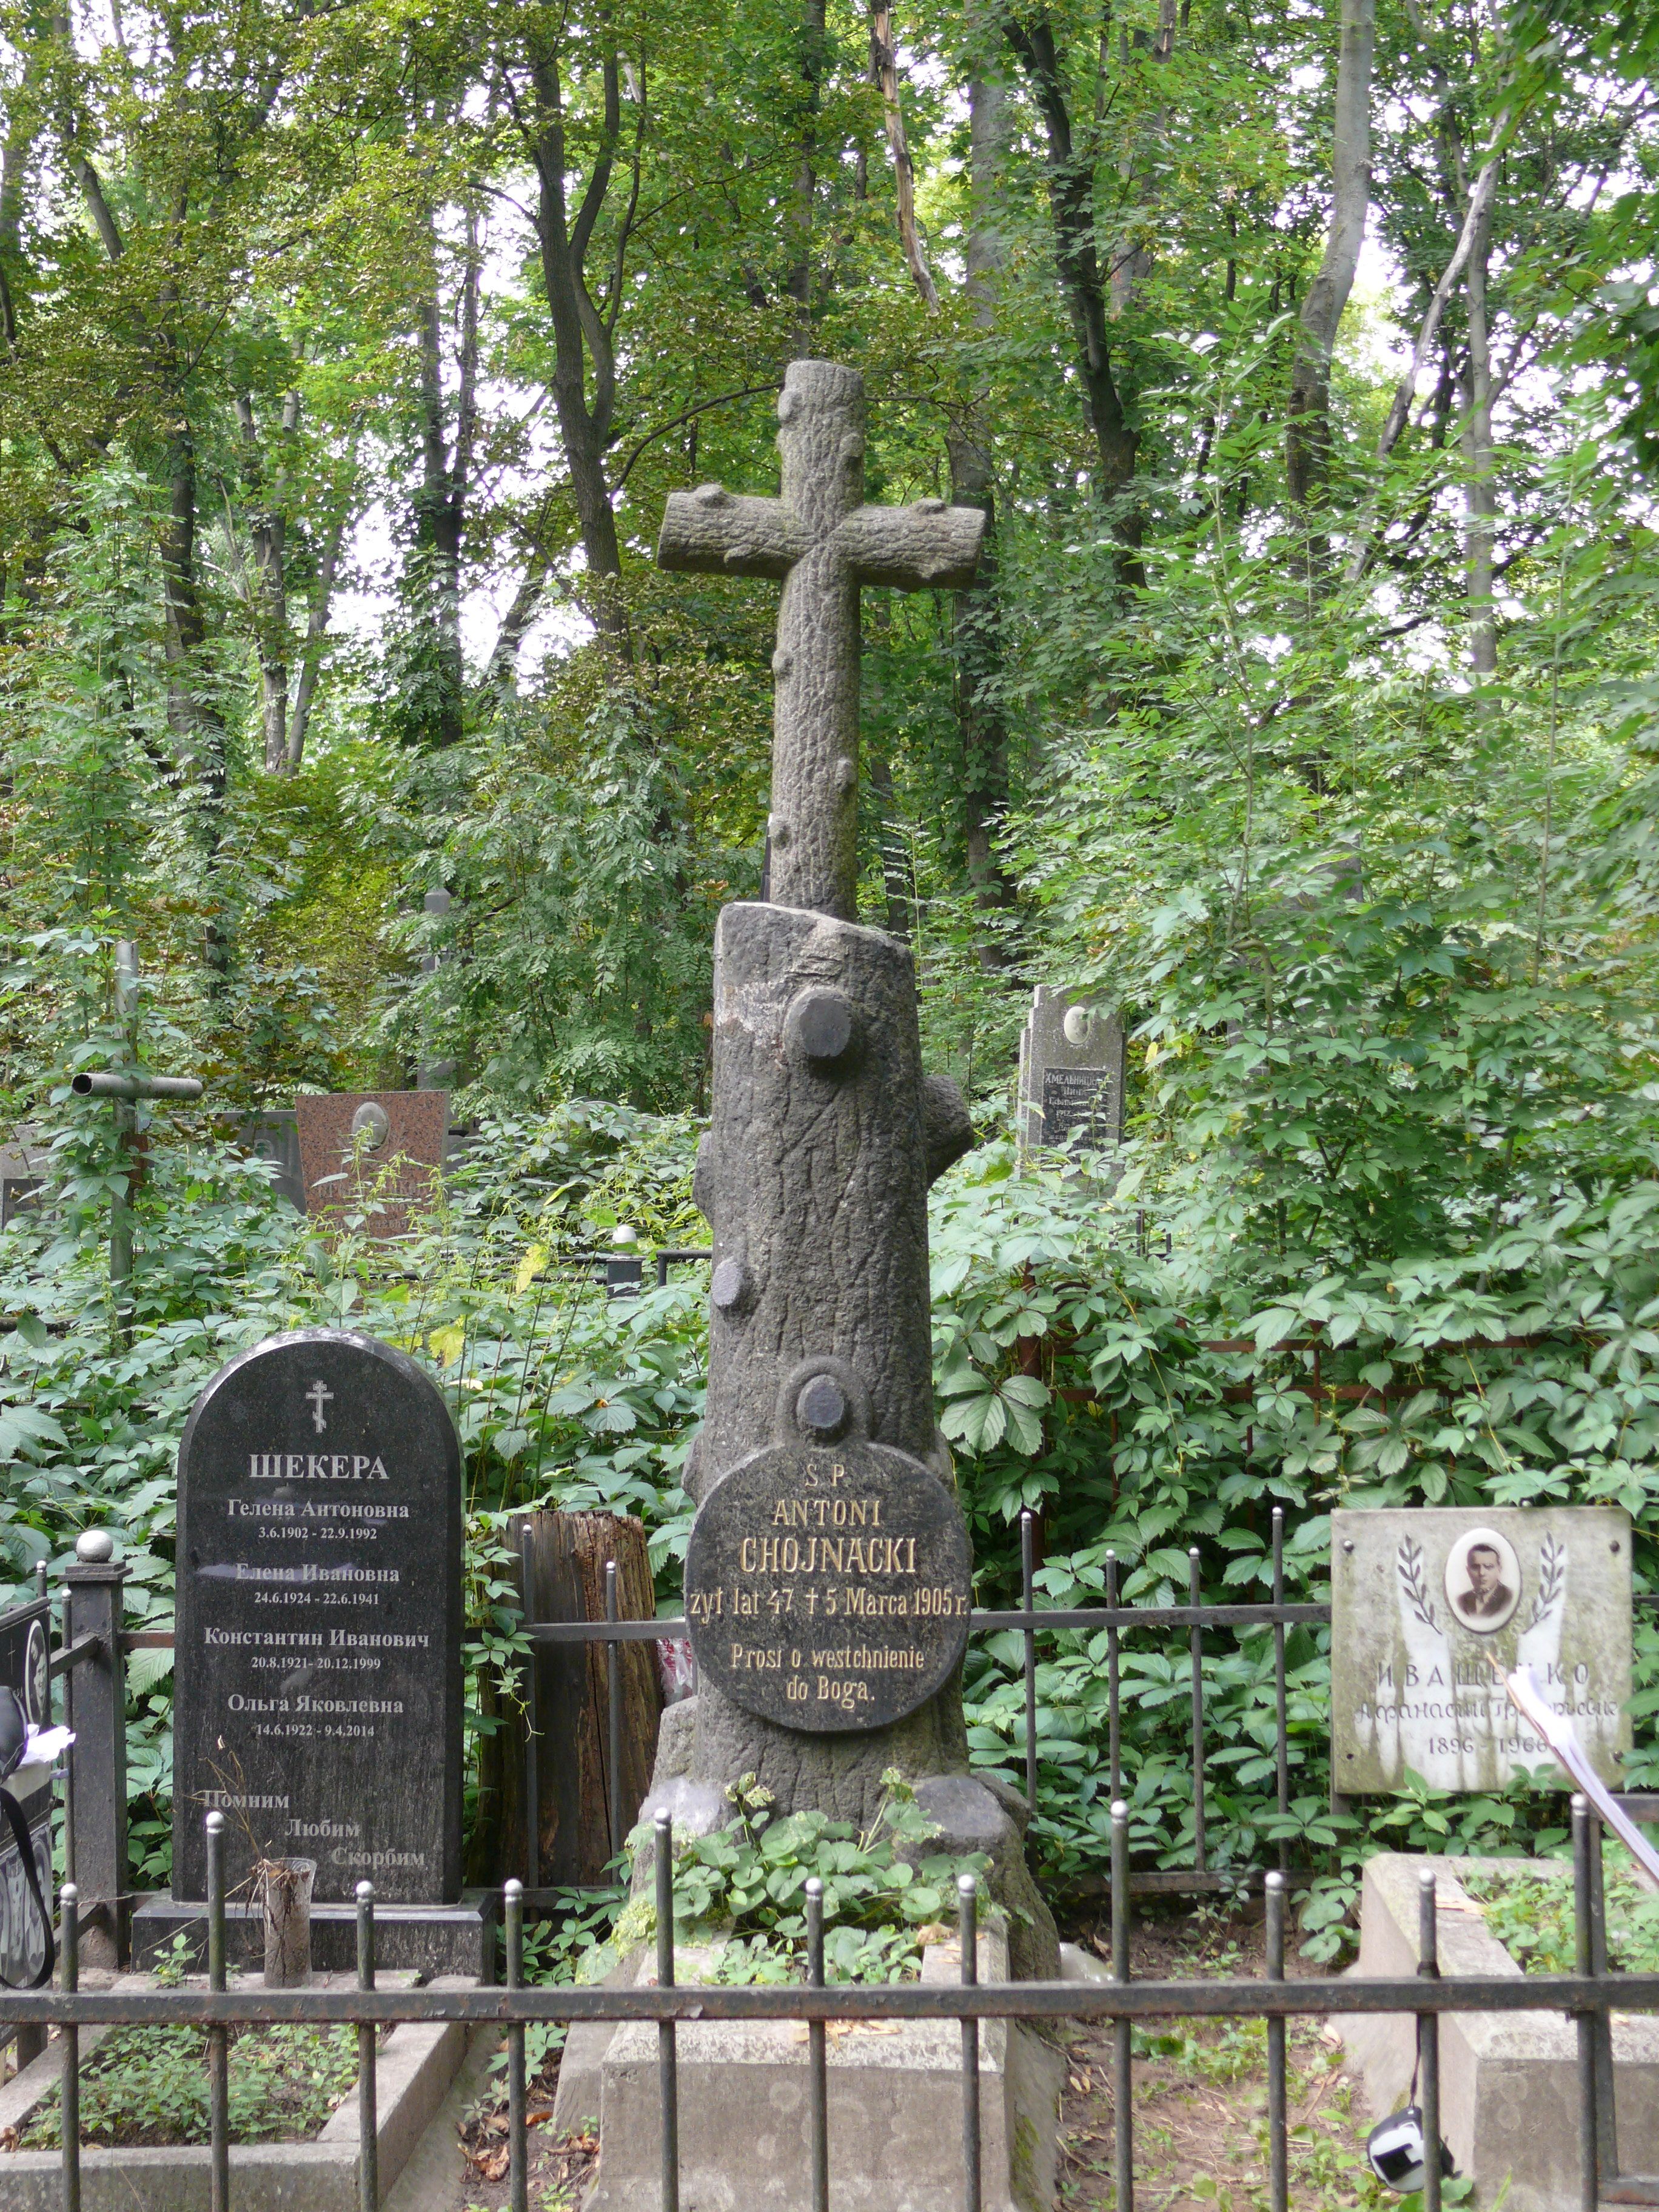 Tombstone of Antoni Chojnacki